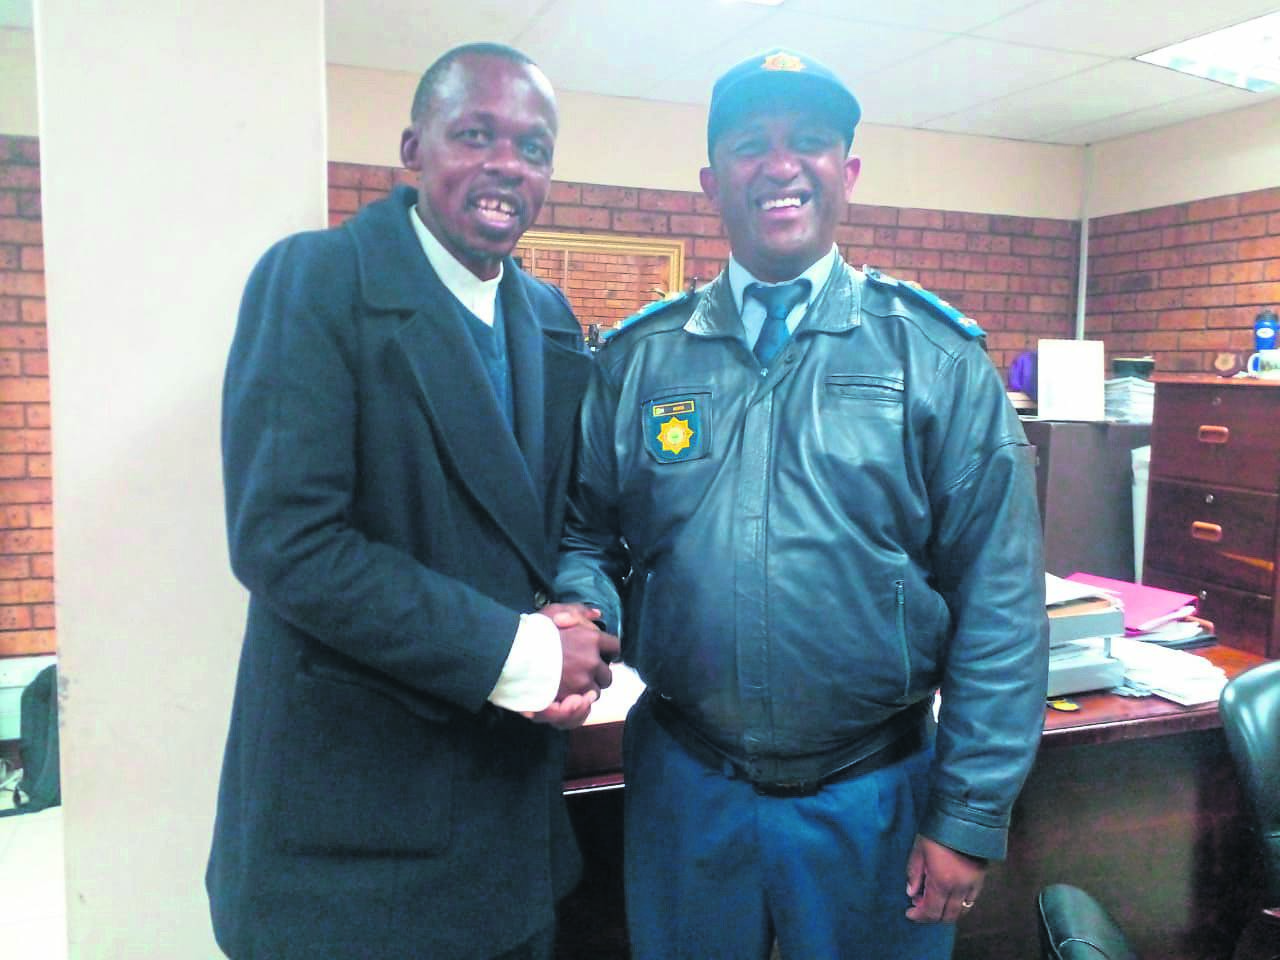 Nyanga CPF secretary, Dumisani Qwebe, congratulates Brigadier Vuyisile Ncata on his promotion to the rank of major-general in the Eastern Cape. Photo by Lulekwa Mbadamane